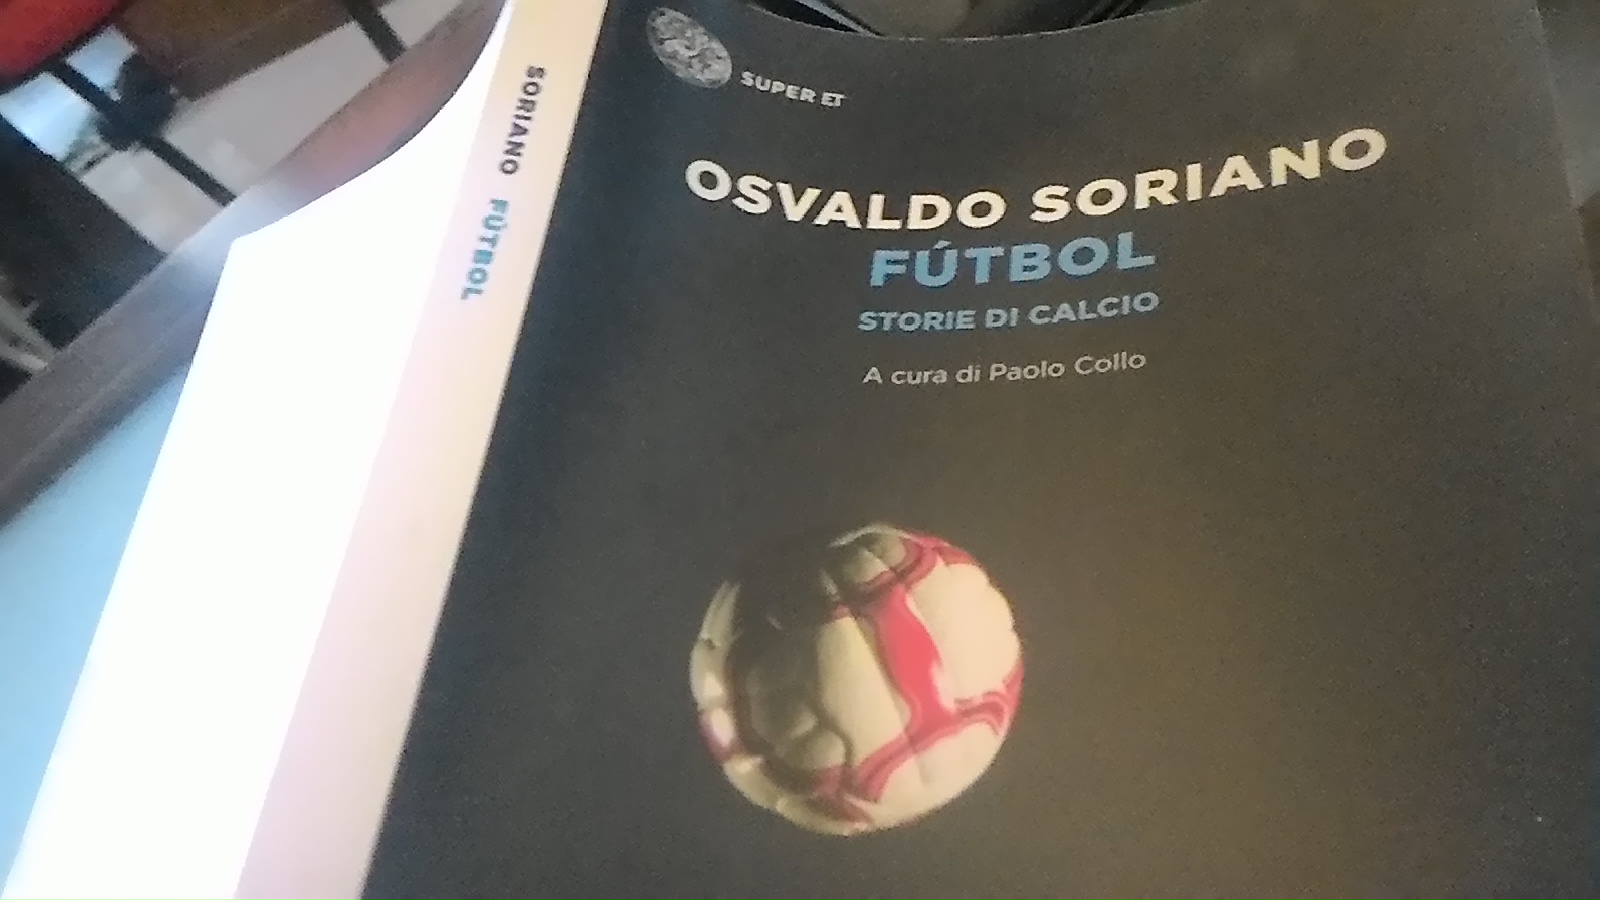 Osvaldo Soriano "Futbol"